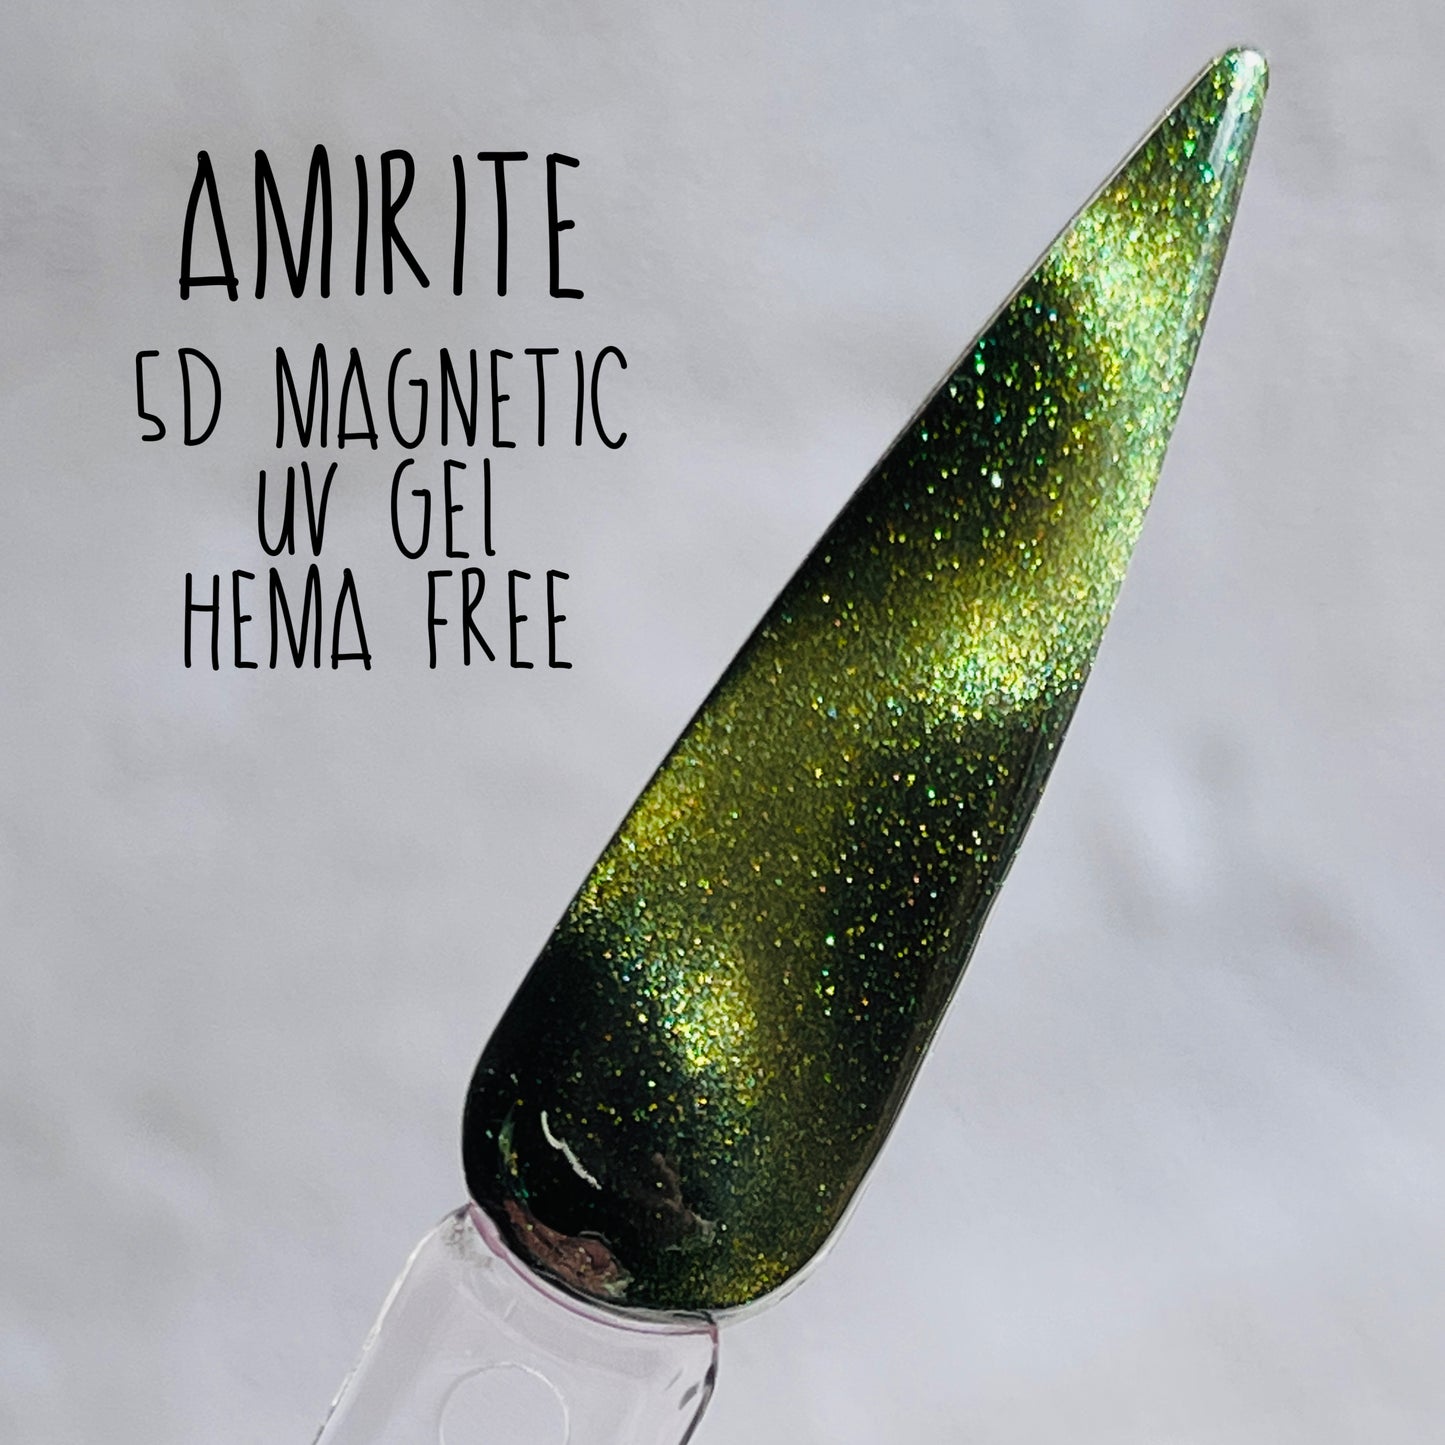 HEMA FREE Amirite 5D Magnetic UV Gel 15ml